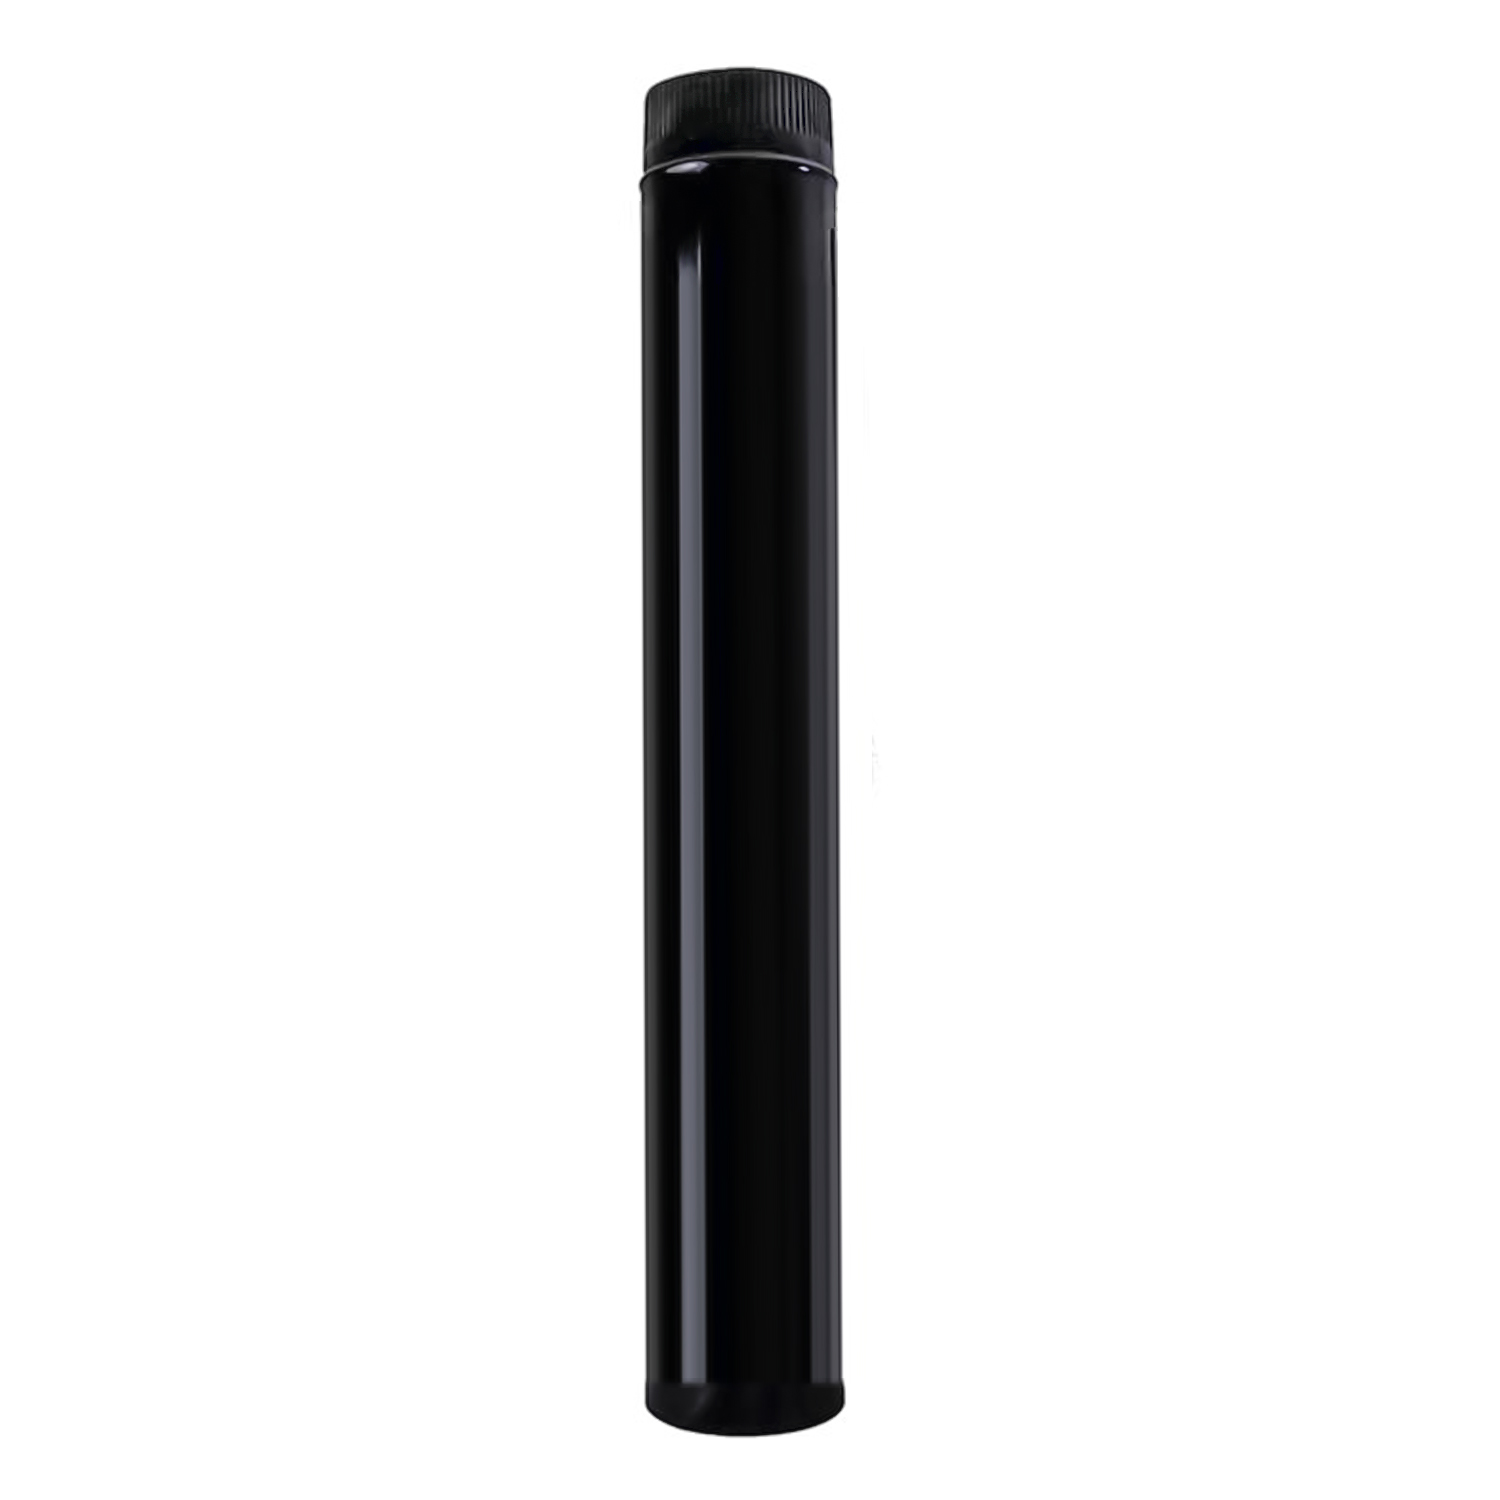 Wolfpack Tubo de Estufa Acero Vitrificado Negro Ø 110 mm. Ideal Estufas de Leña, Chimenea, Alta resi